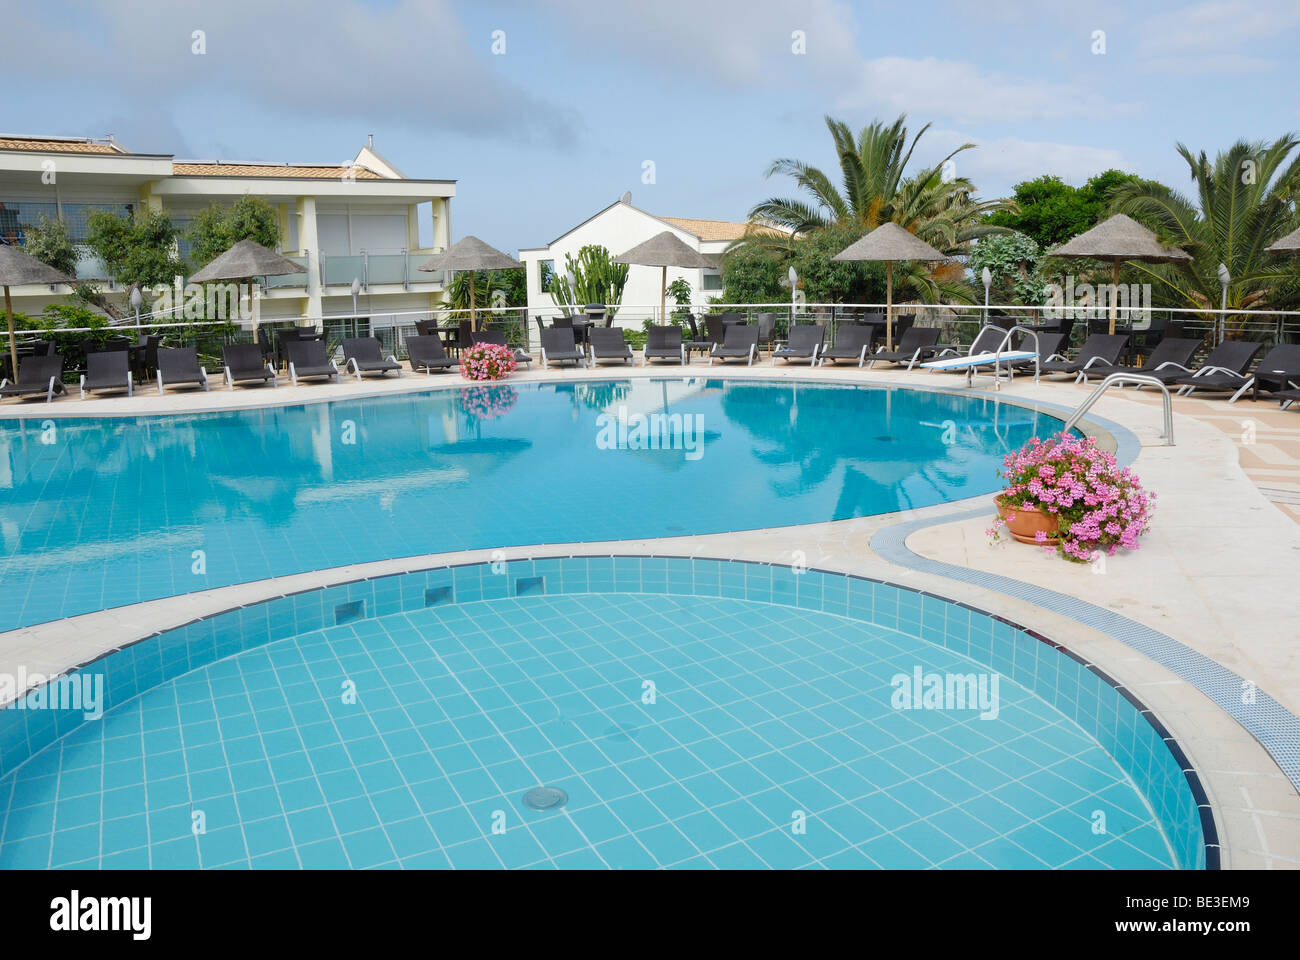 Pool in a hotel complex in the Tyrrhenian Sea, near Ricado, Calabria, South Italy, Europe Stock Photo